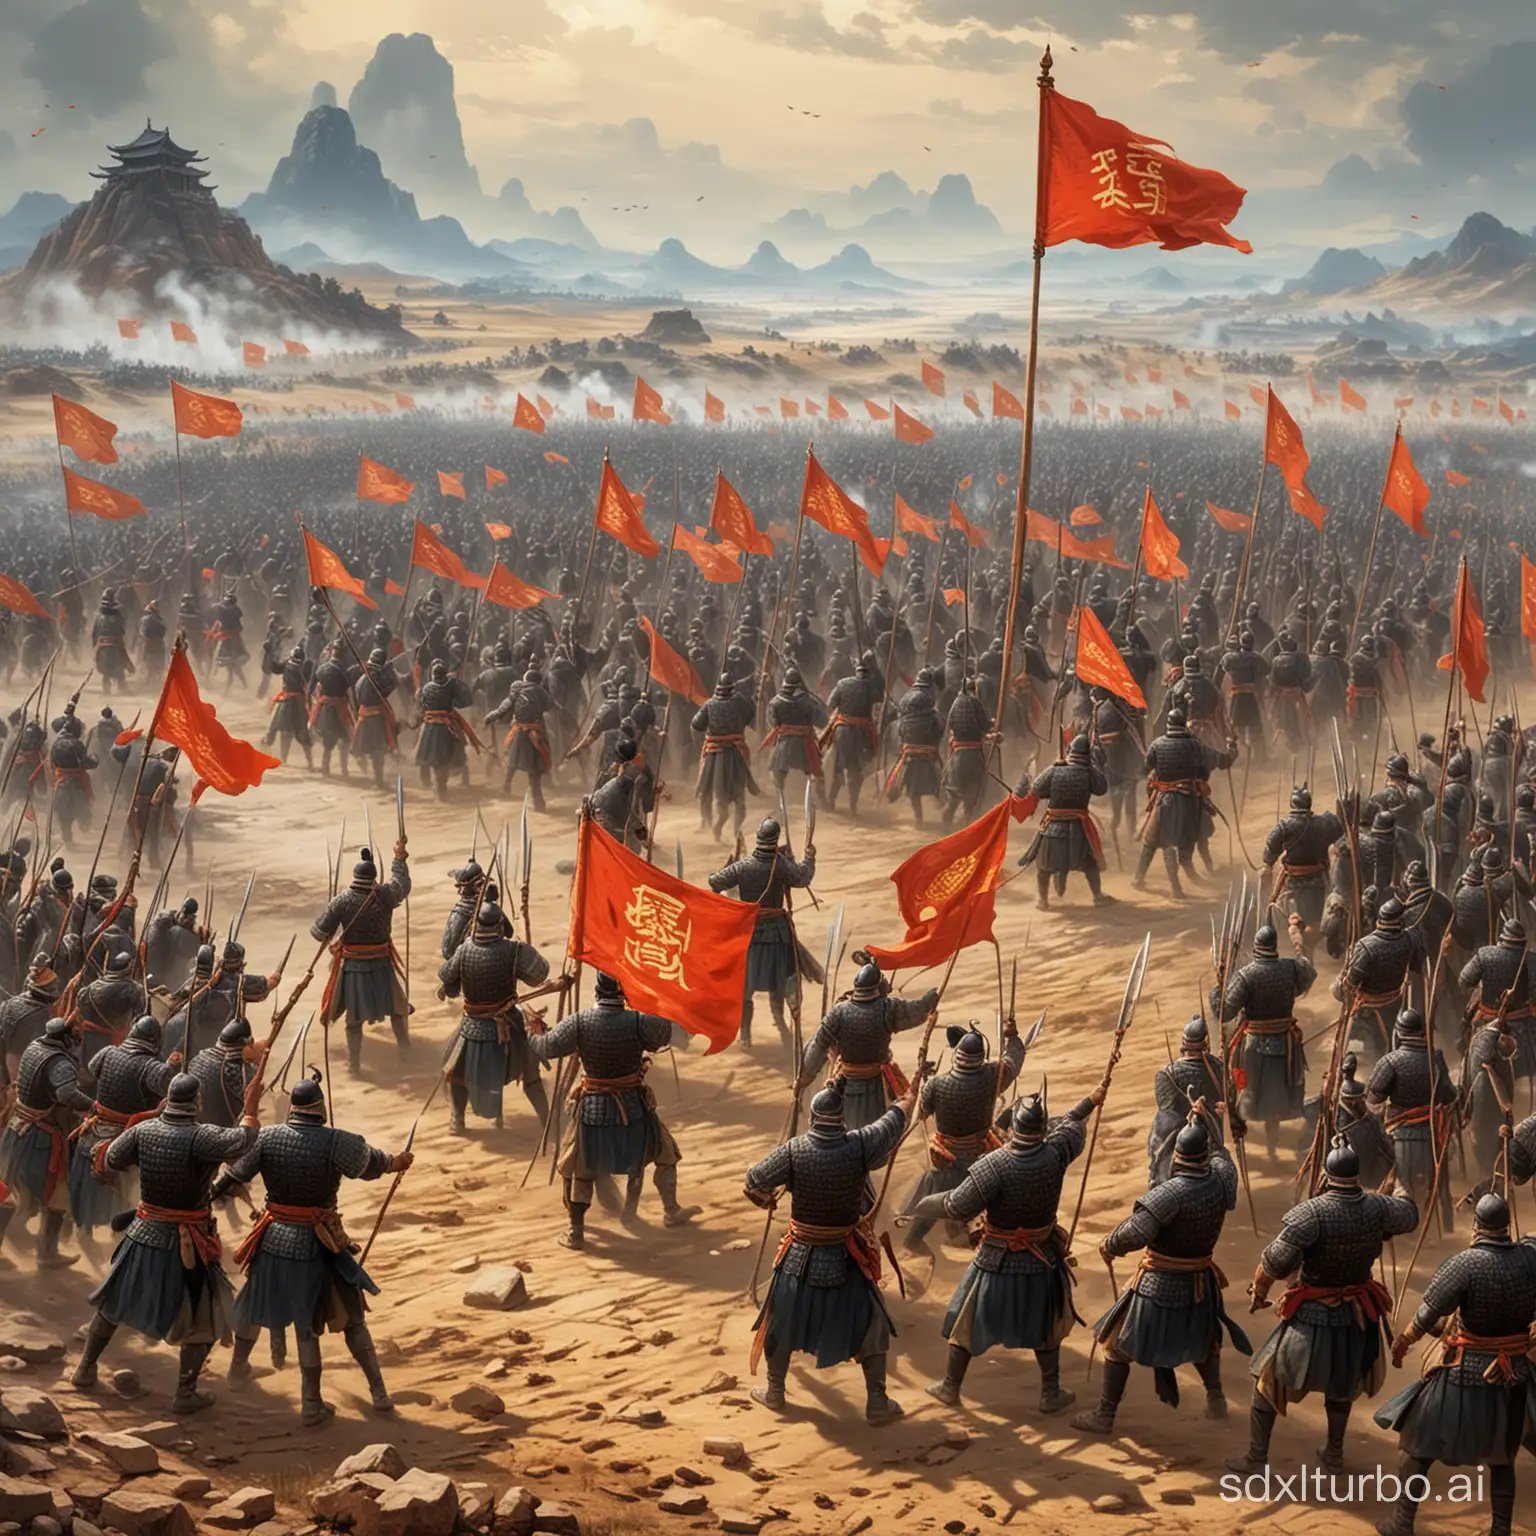 Qin-Infantry-Army-Hoisting-Flag-on-Ancient-Battlefield